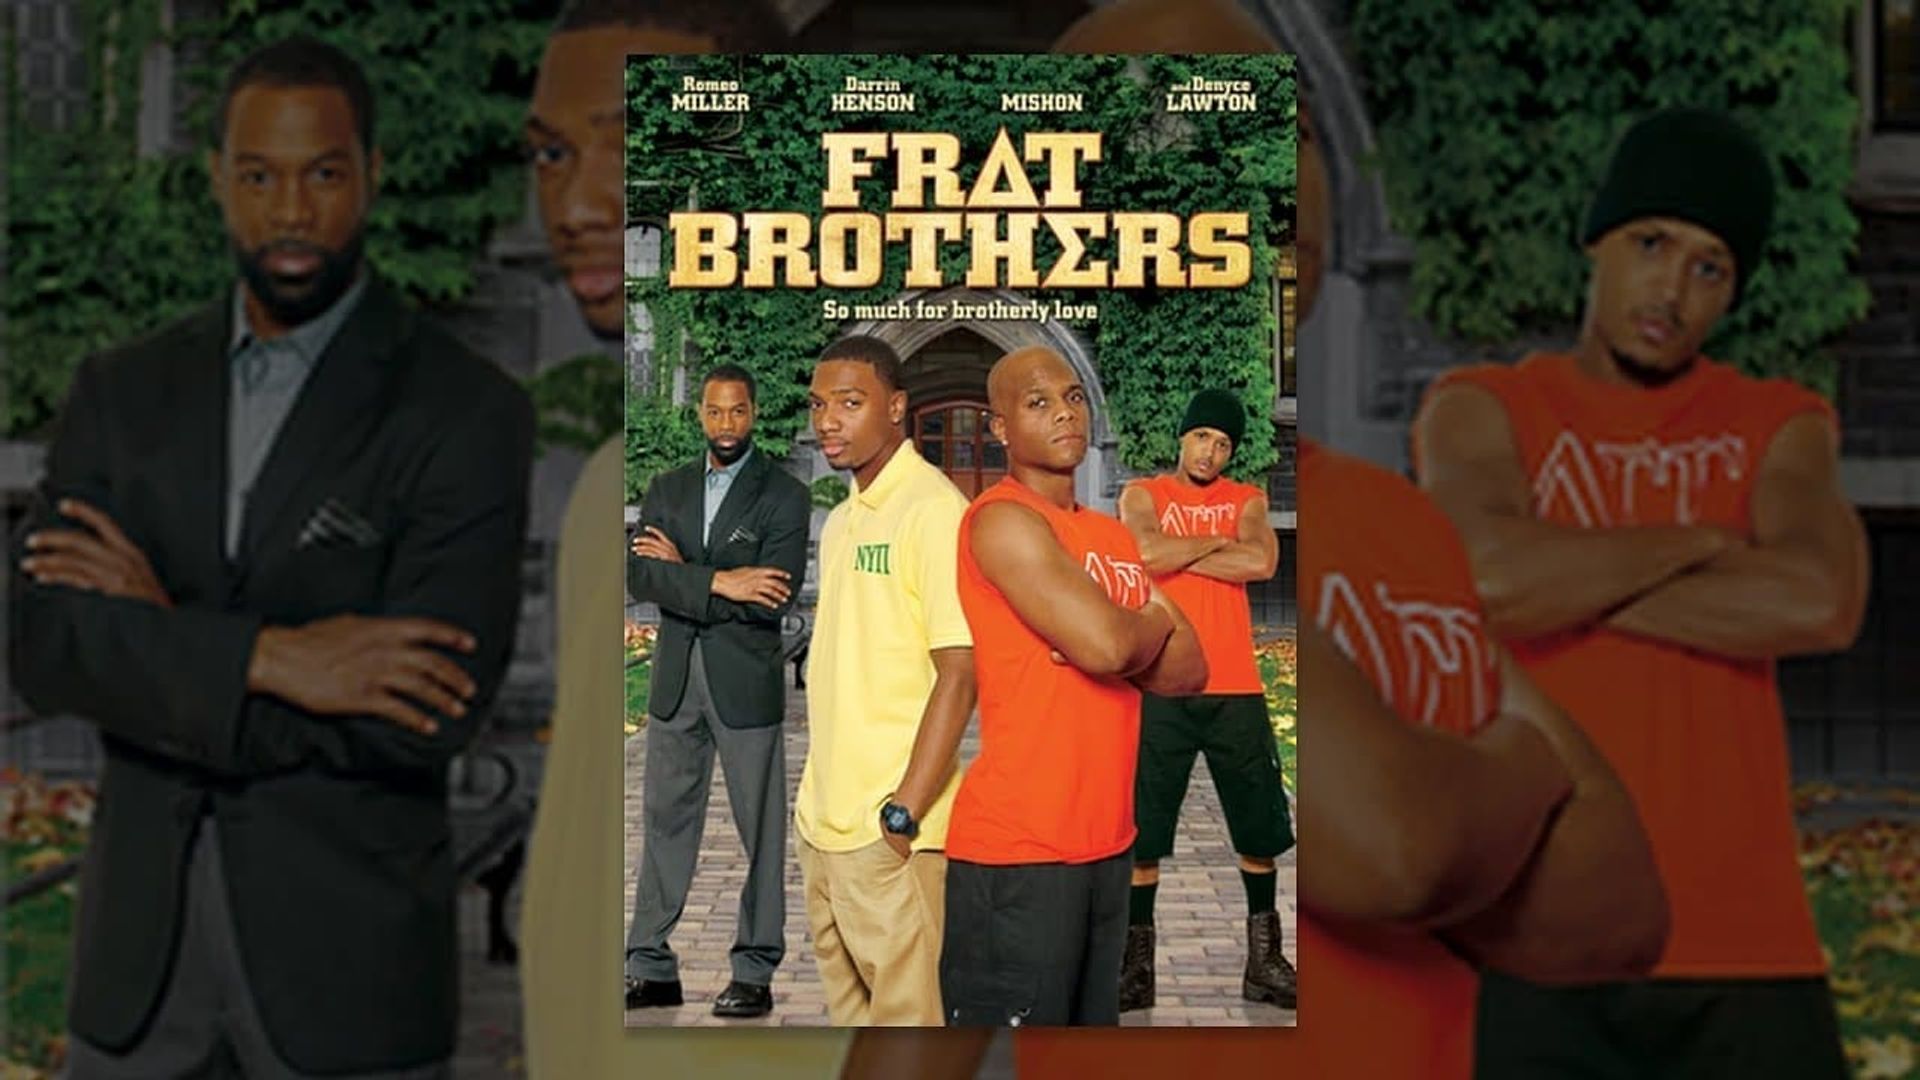 Frat Brothers background